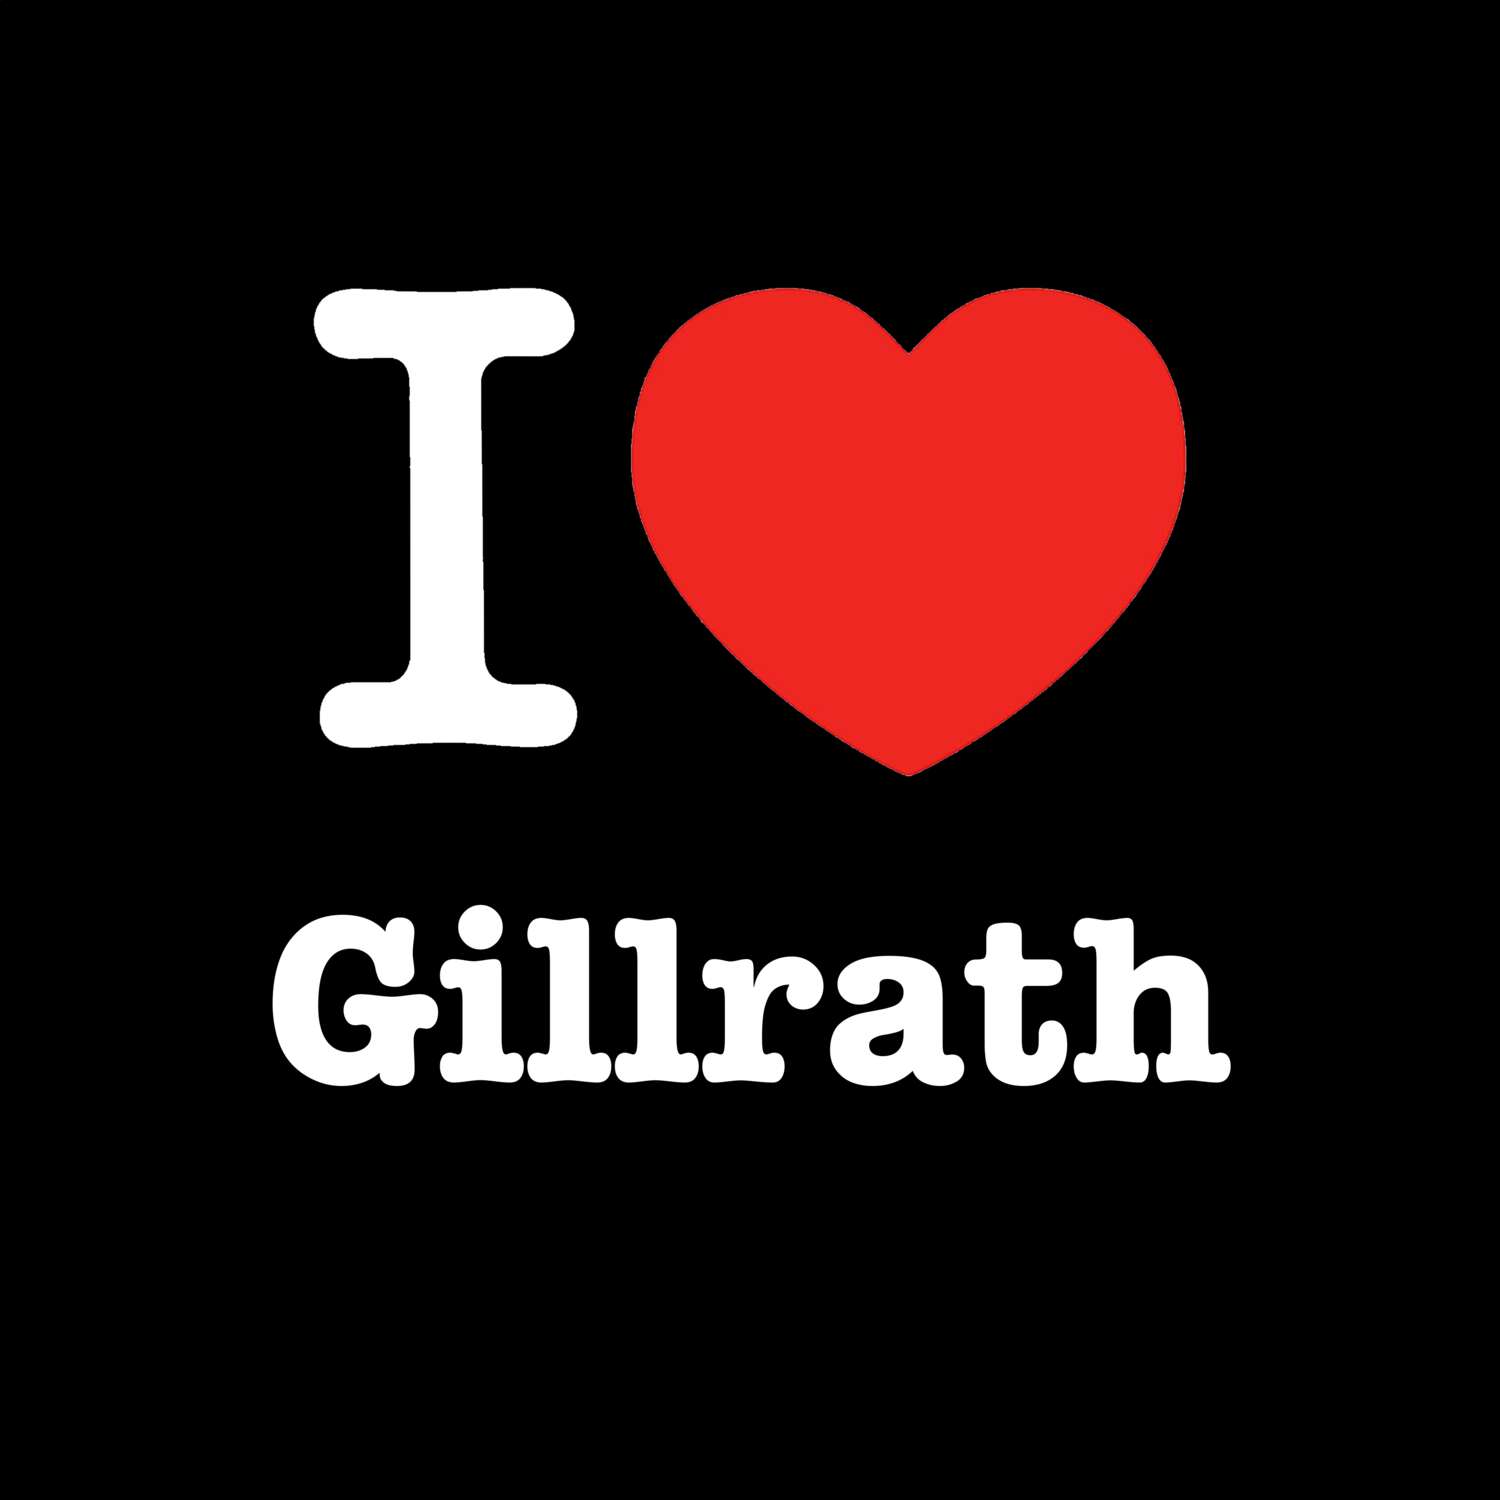 Gillrath T-Shirt »I love«